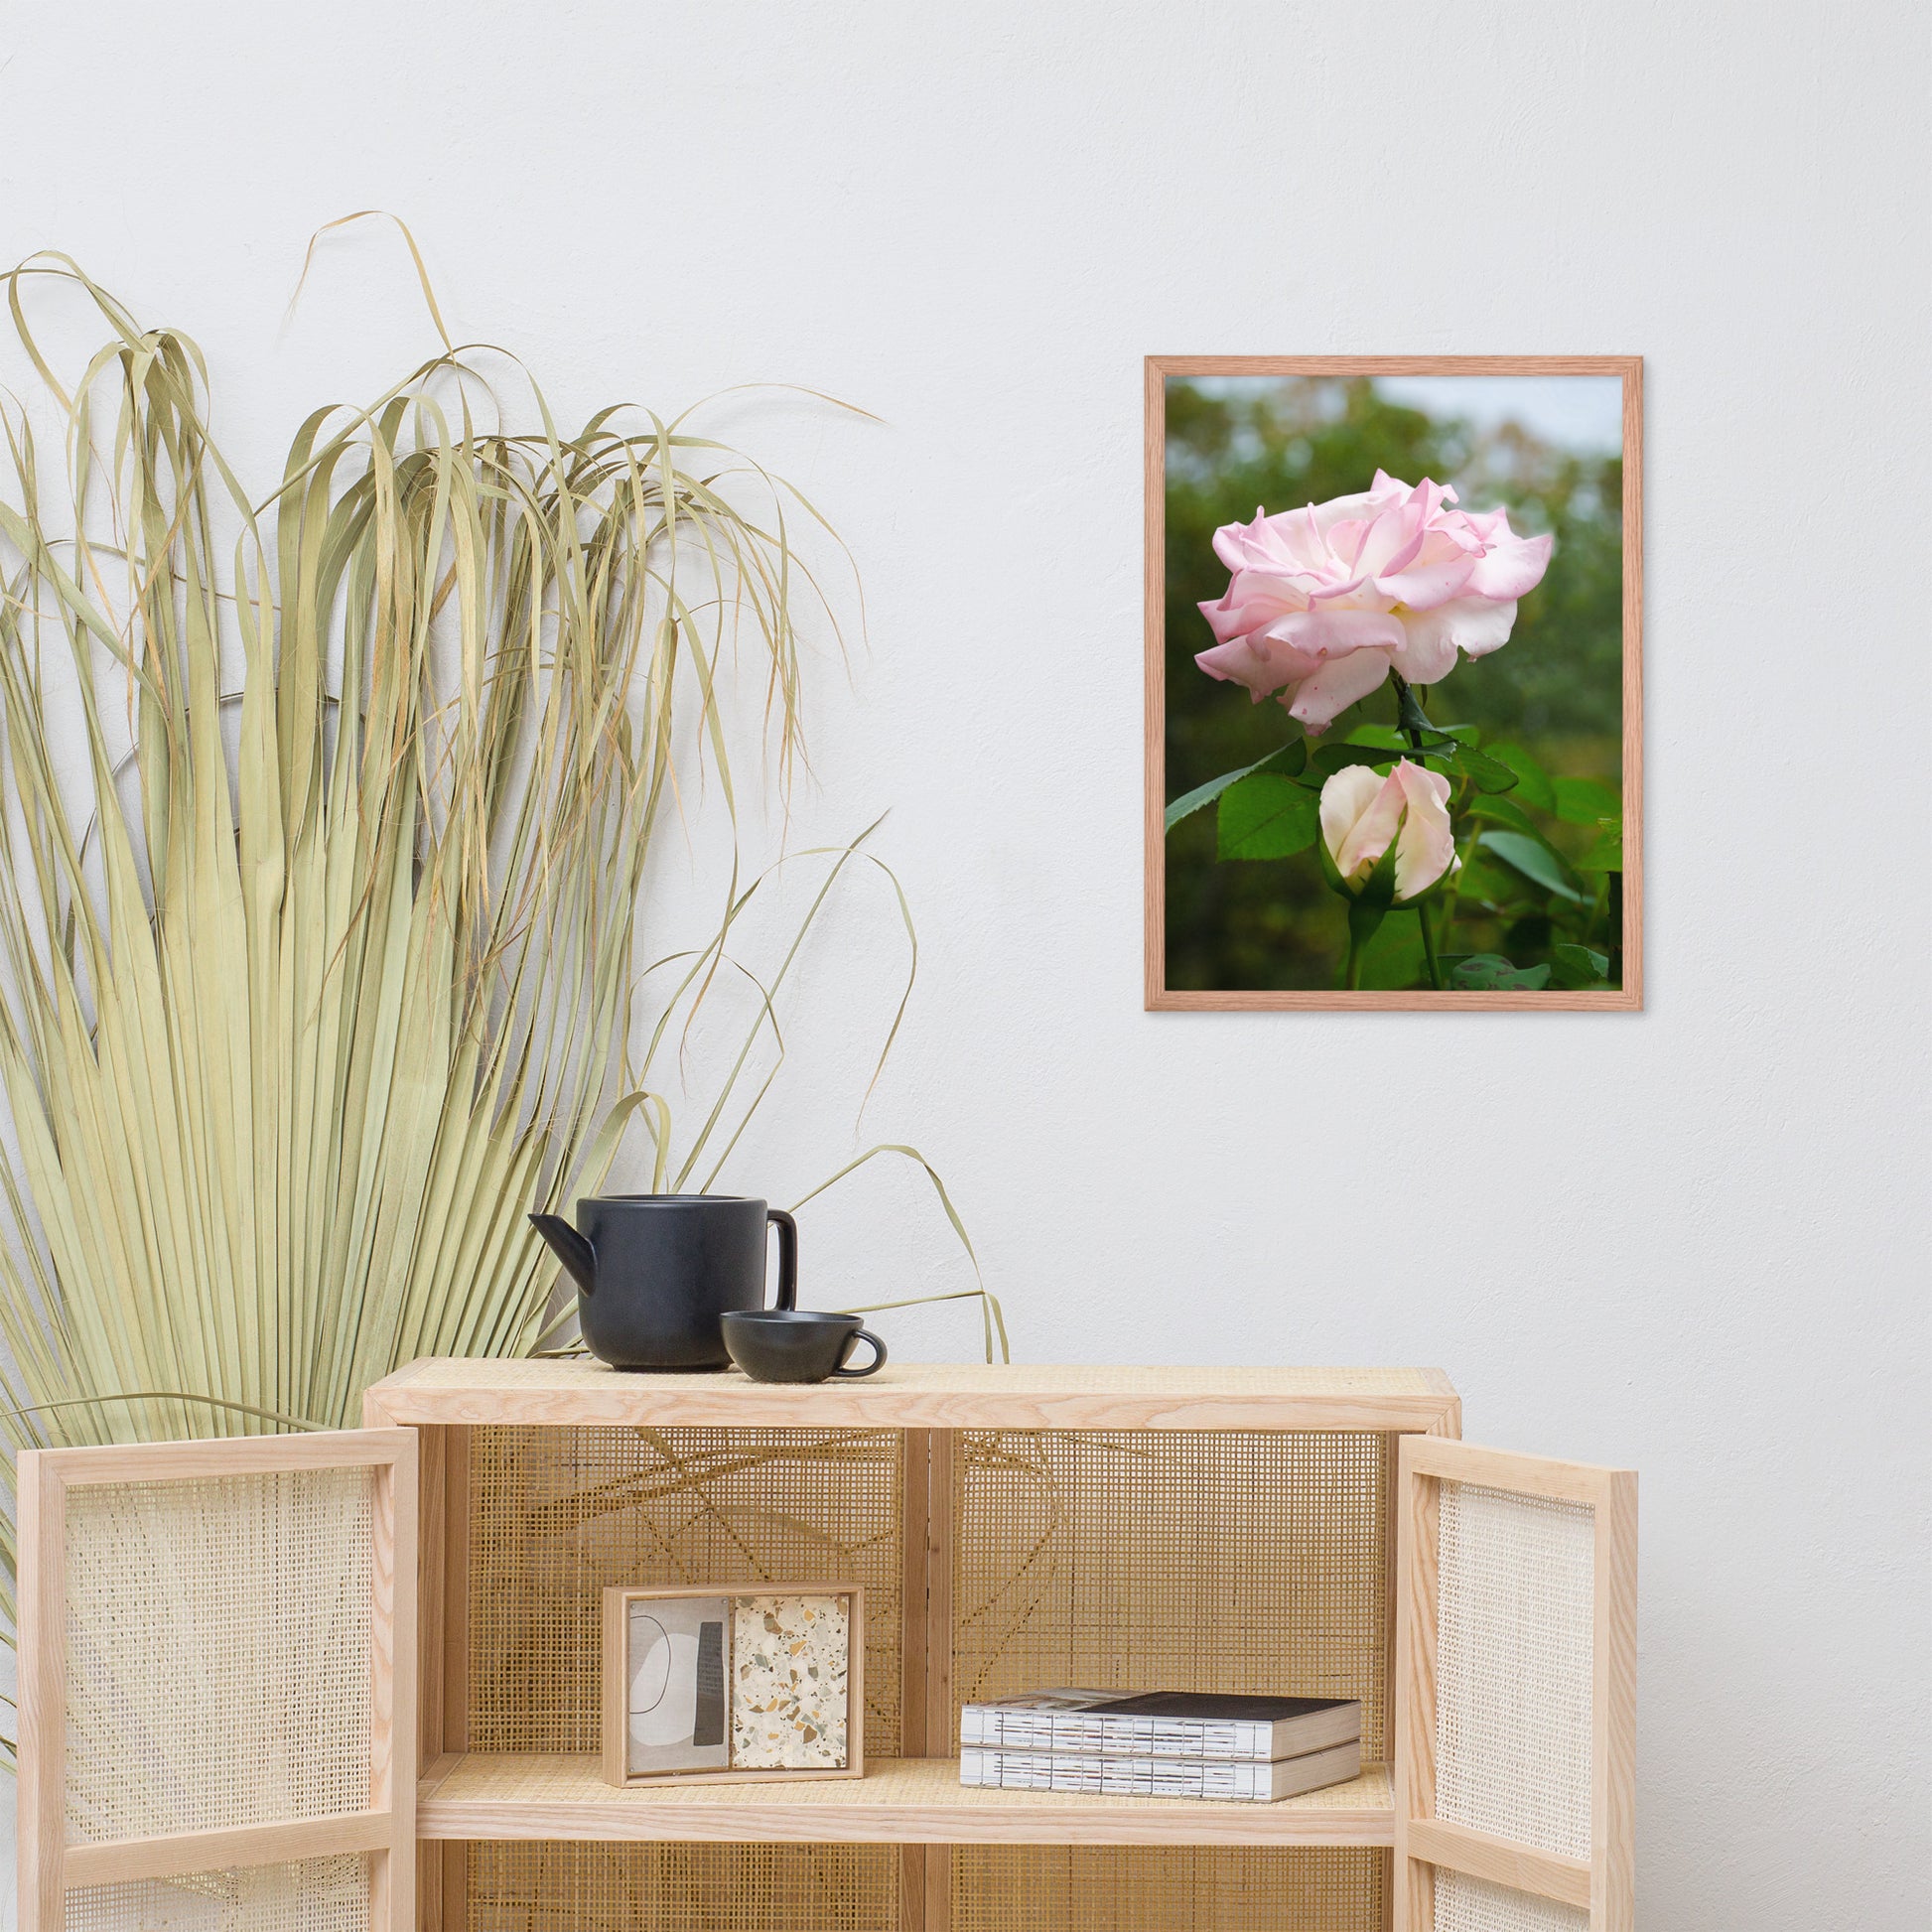 Framed Prints Flowers: Admiration - Pink Rose Floral / Botanical / Nature Photo Framed Wall Art Print - Artwork - Wall Decor - Home Decor